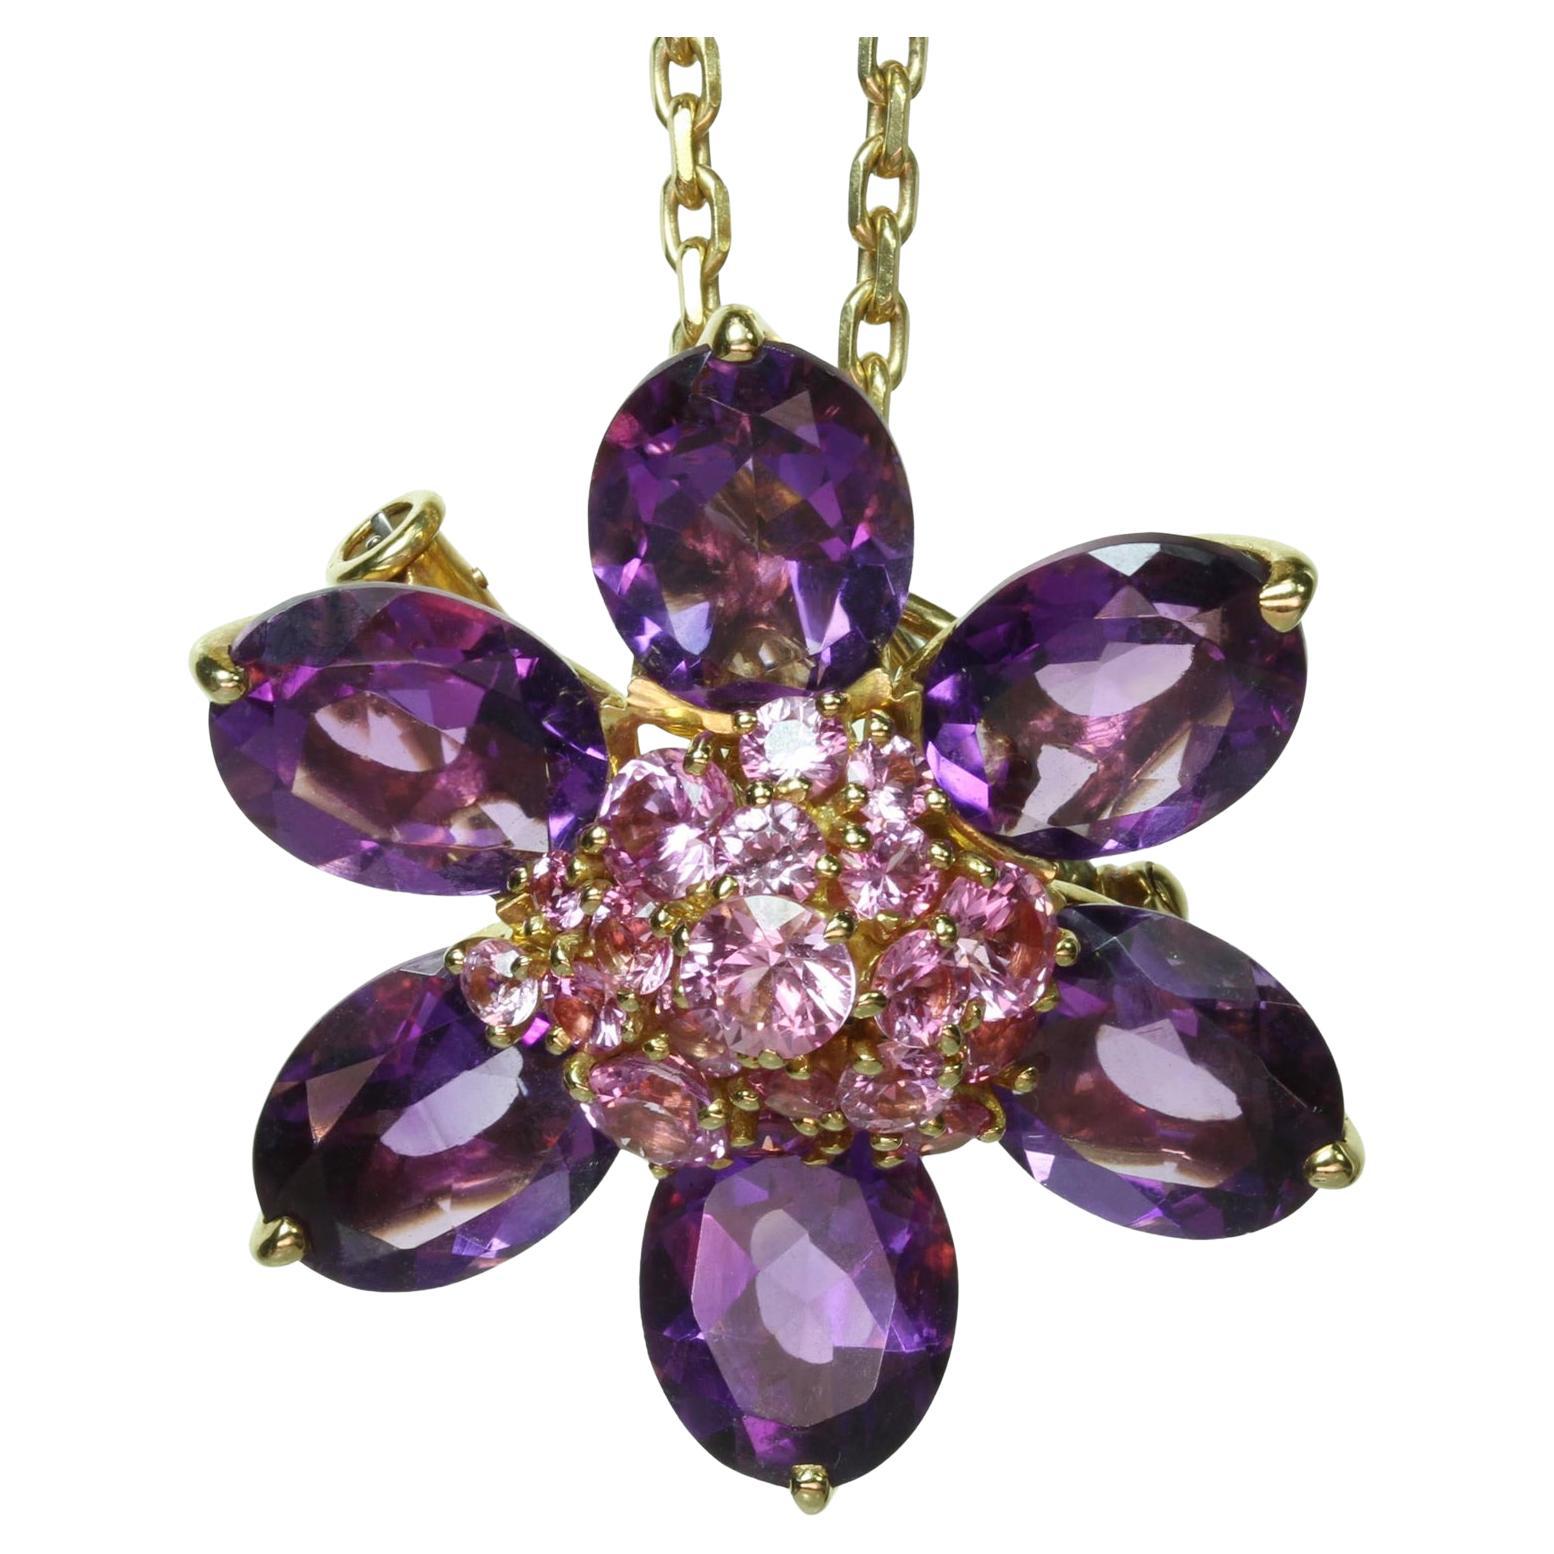 VAN CLEEF & ARPELS Hawaii Amethyst Pink Sapphire Brooch Pendant Gold Necklace